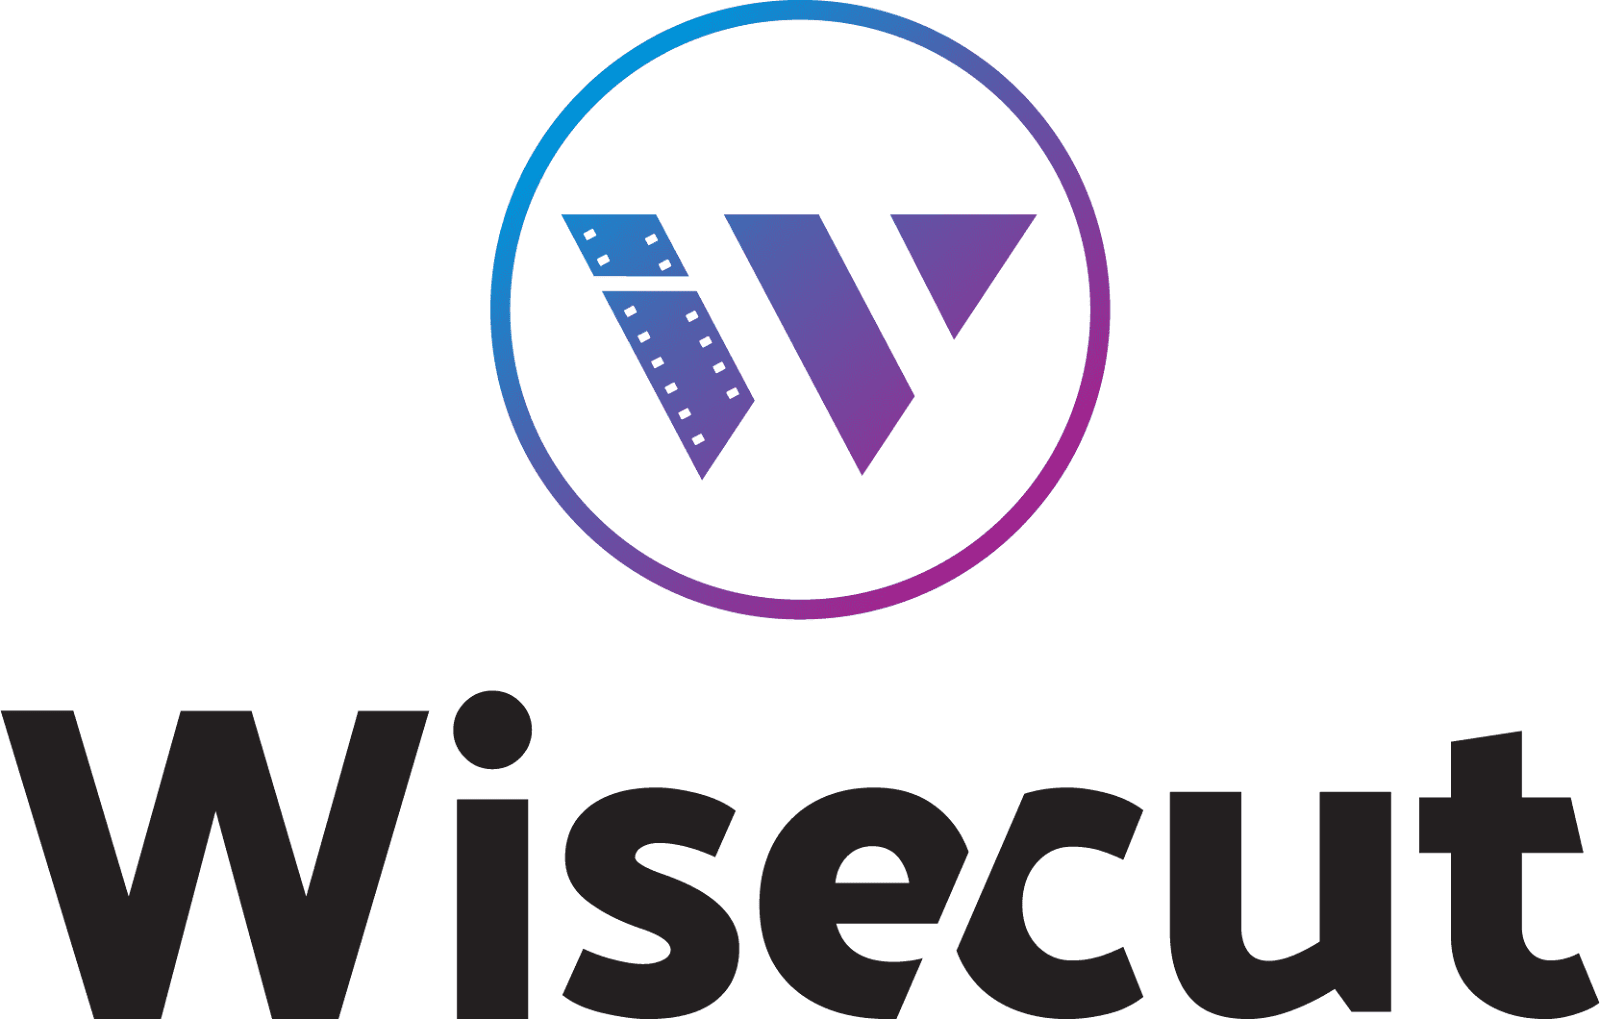 Wisecut - Crunchbase Company Profile & Funding